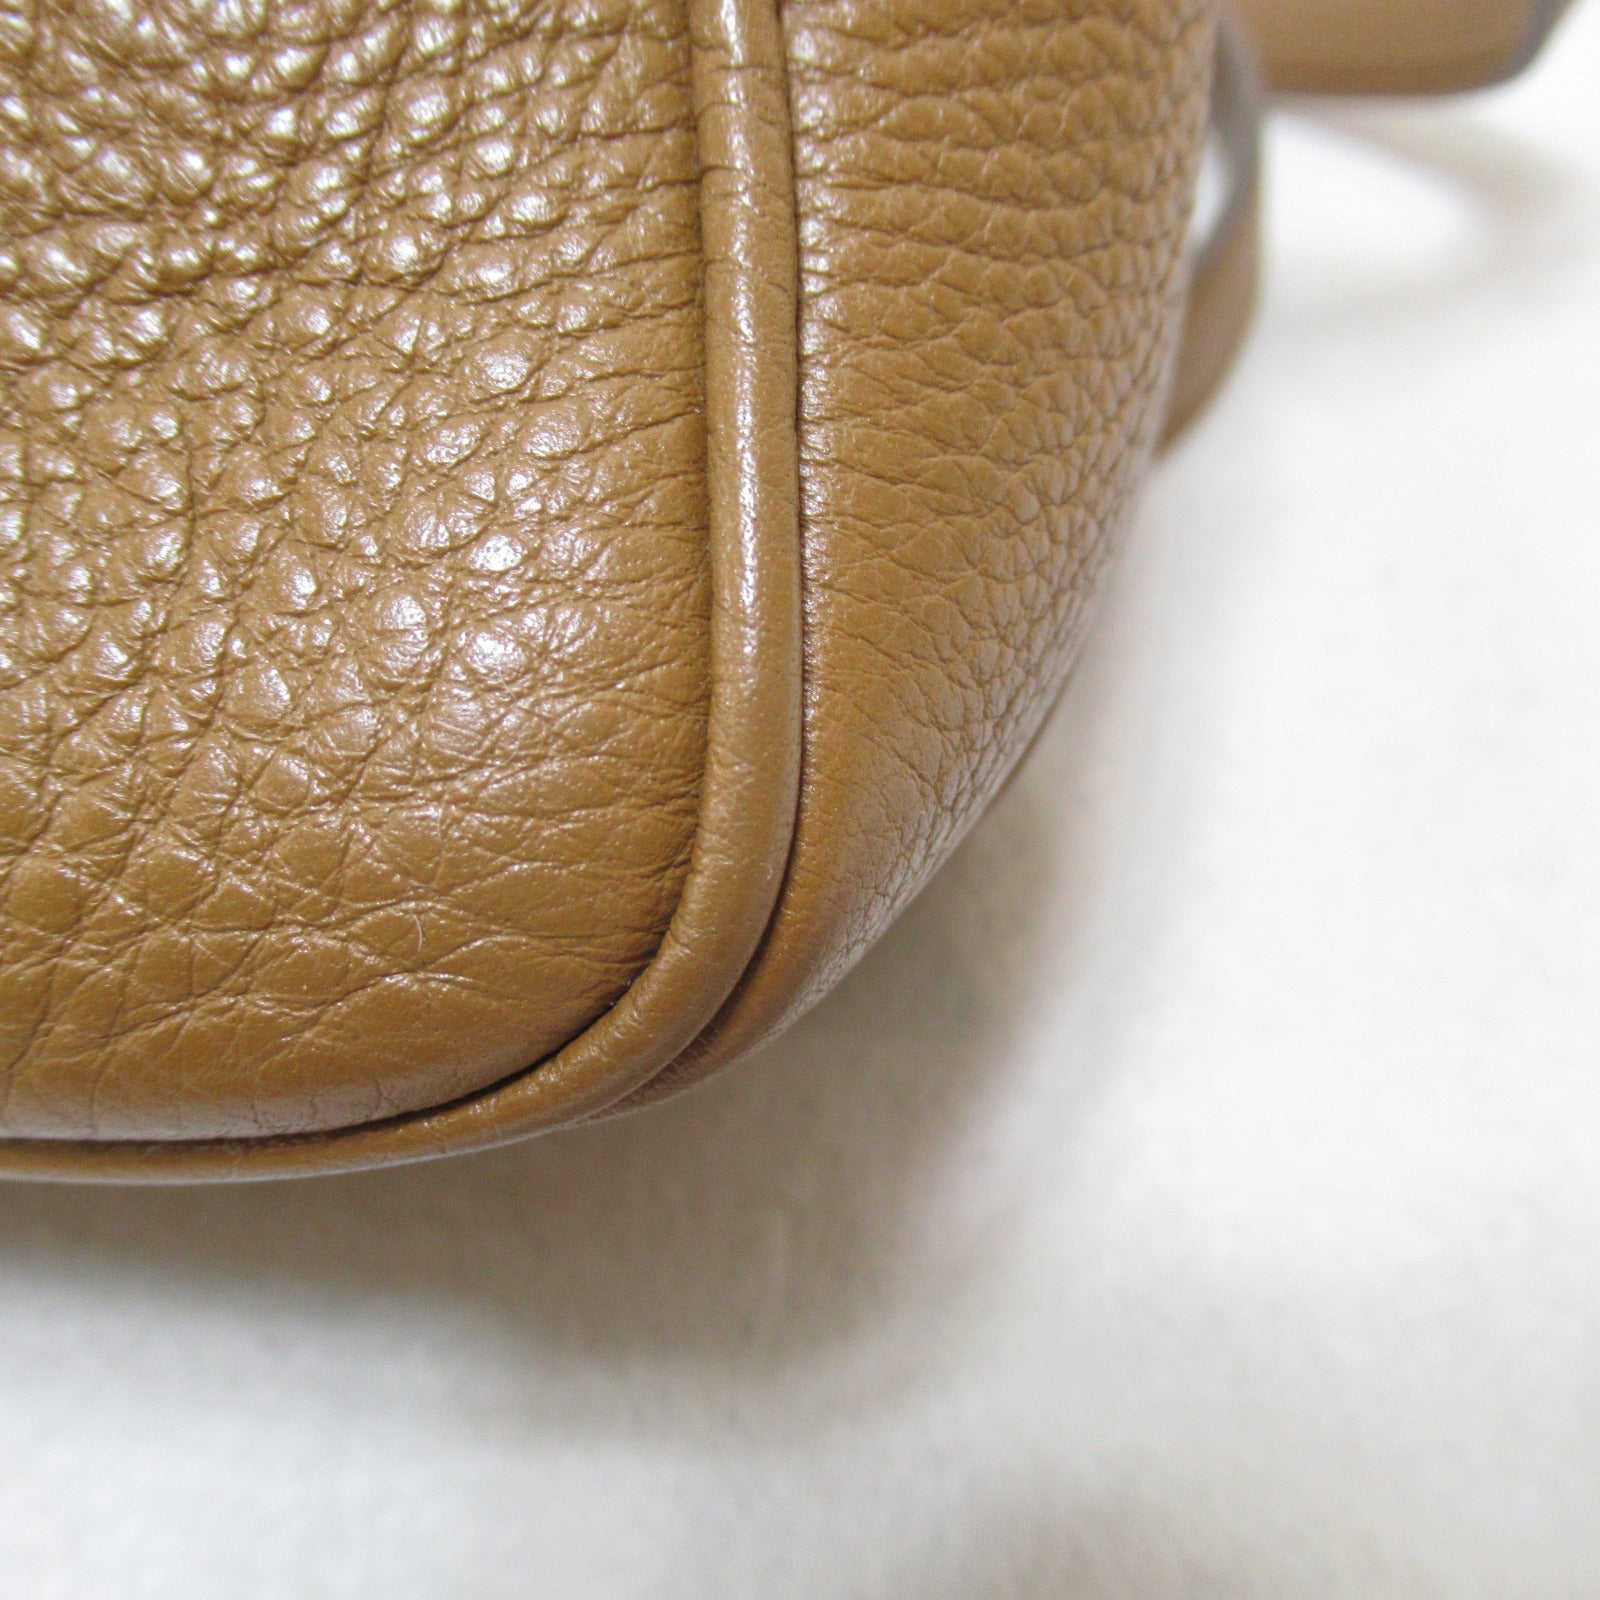 Prada Prada Shoulder Bag Shoulder Bag Leather  Brown